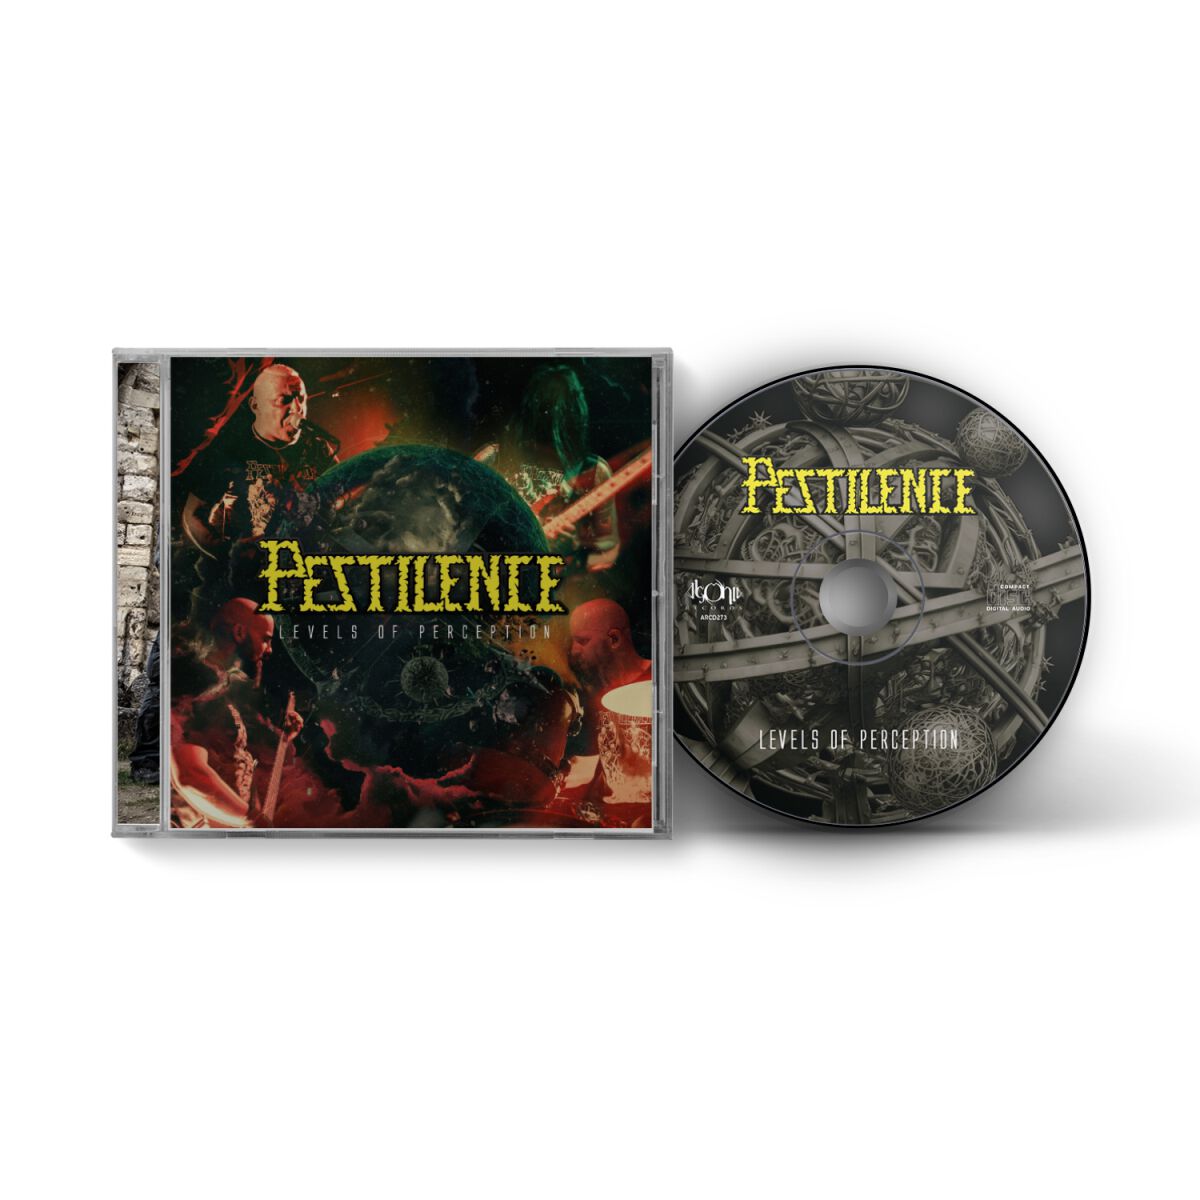 Level of Perception von Pestilence - CD (Jewelcase)